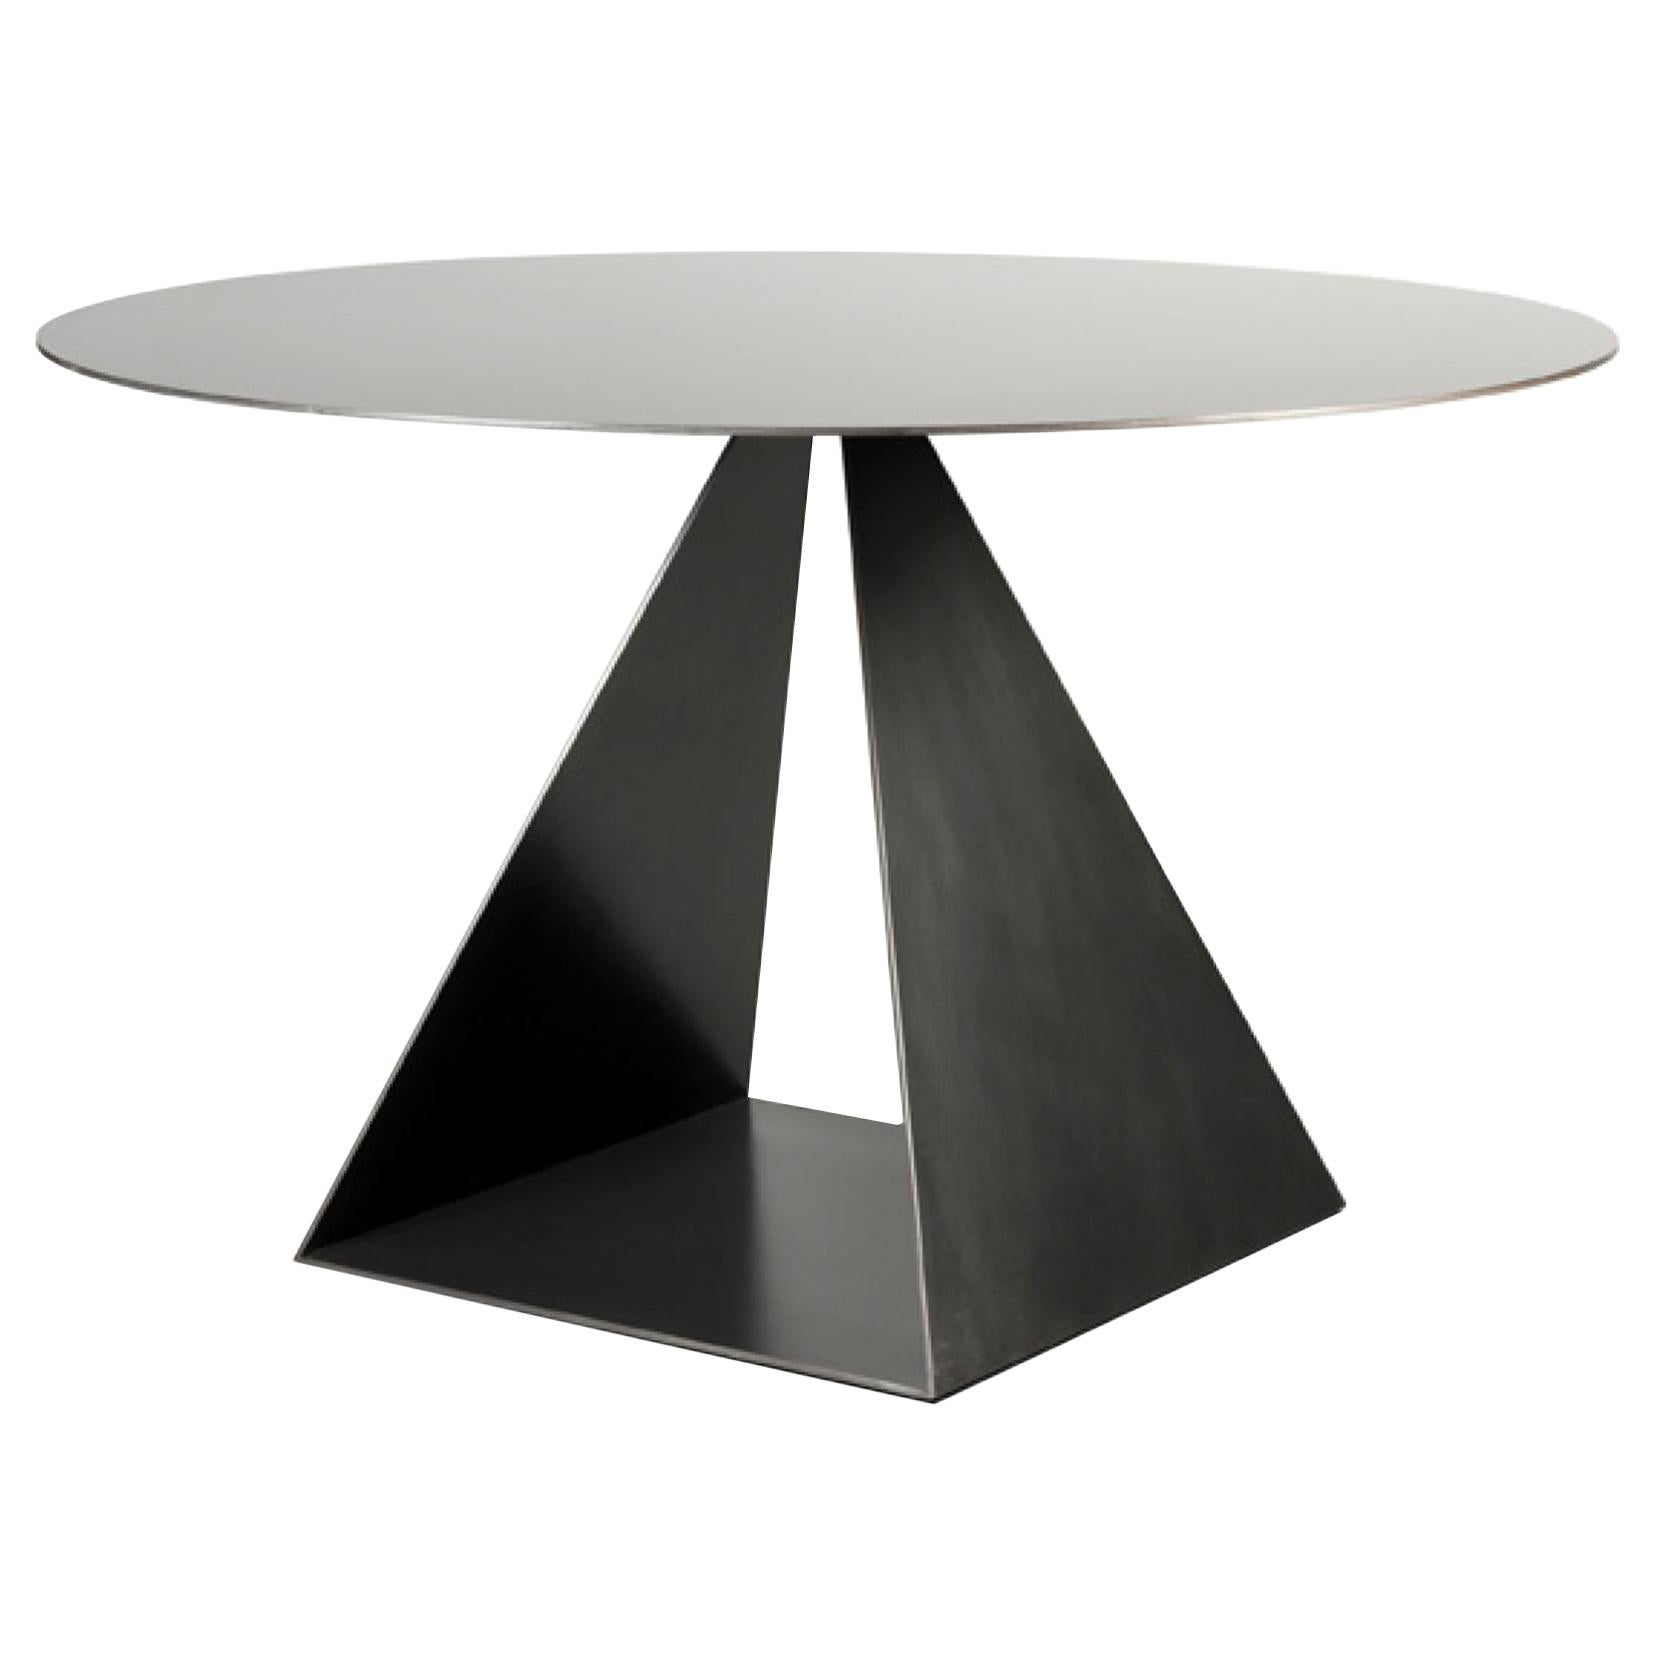 Geometric Triangle Round Top Metal Dining Table Blackened Finish customizable